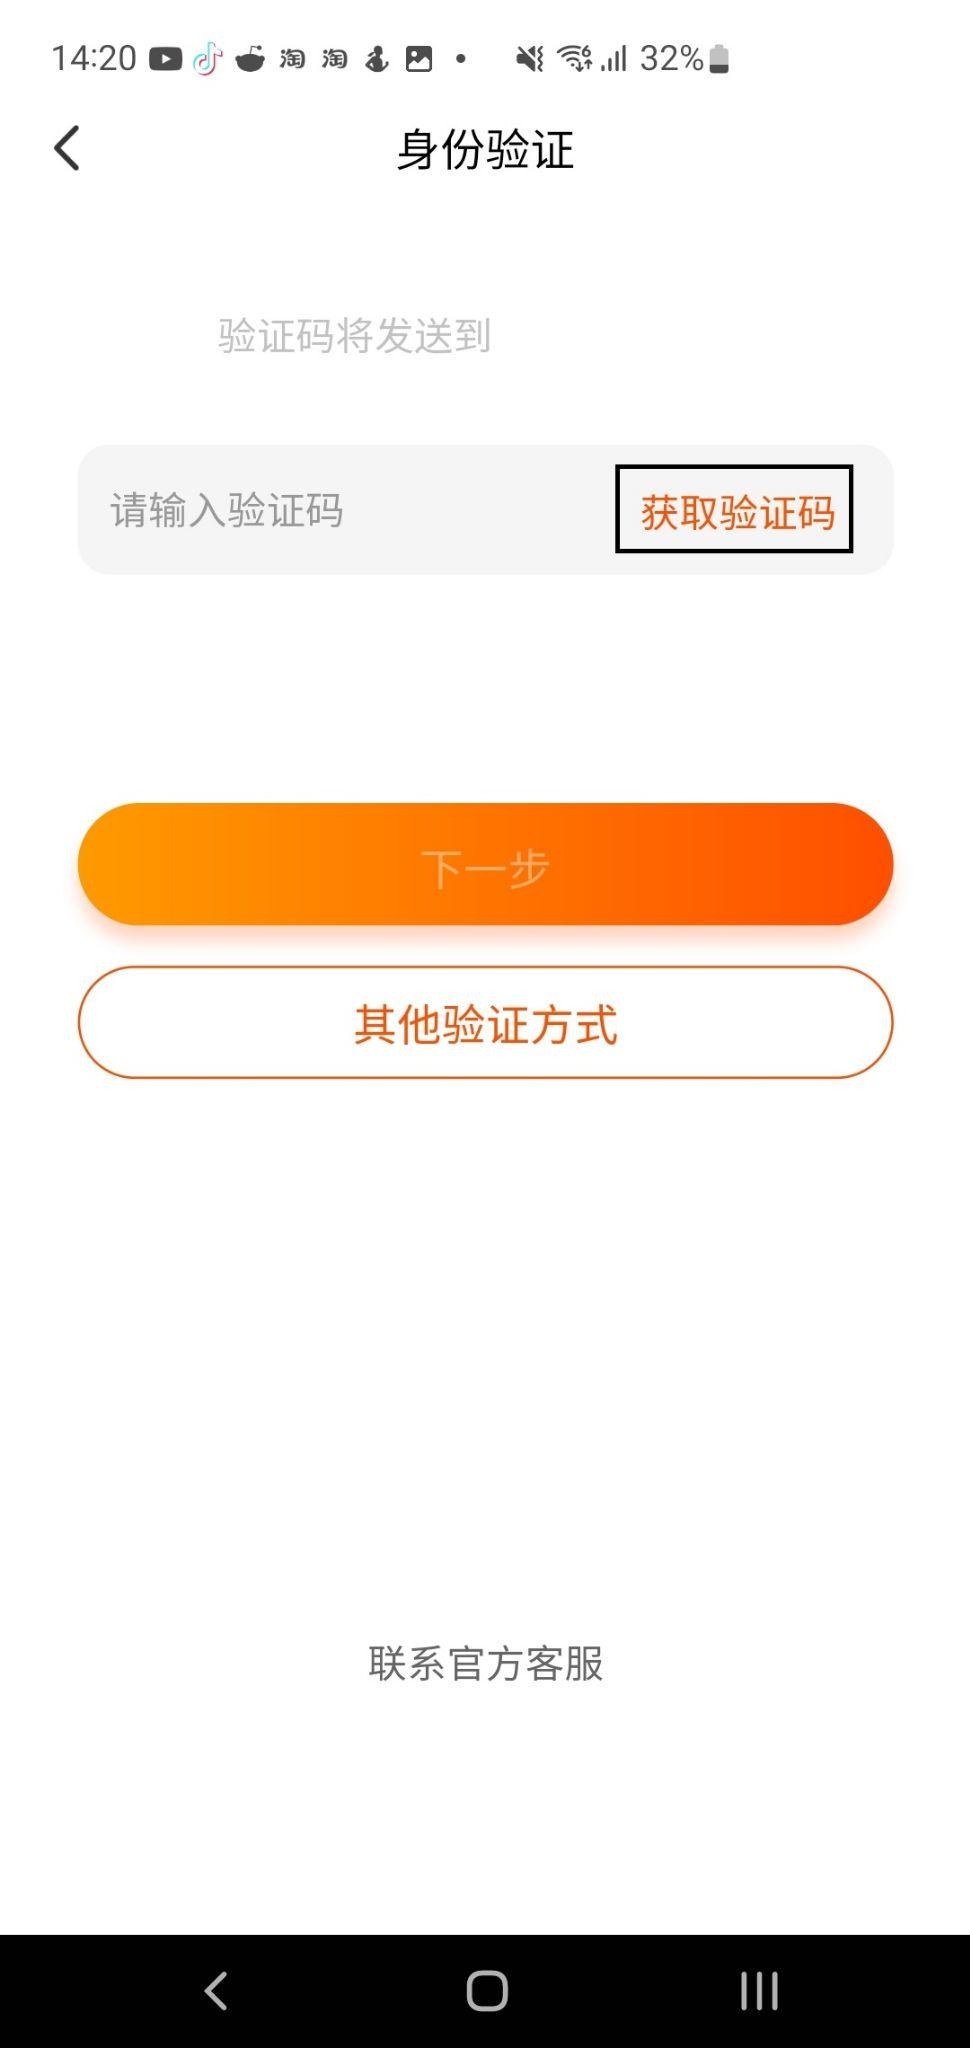 Change password on mobile